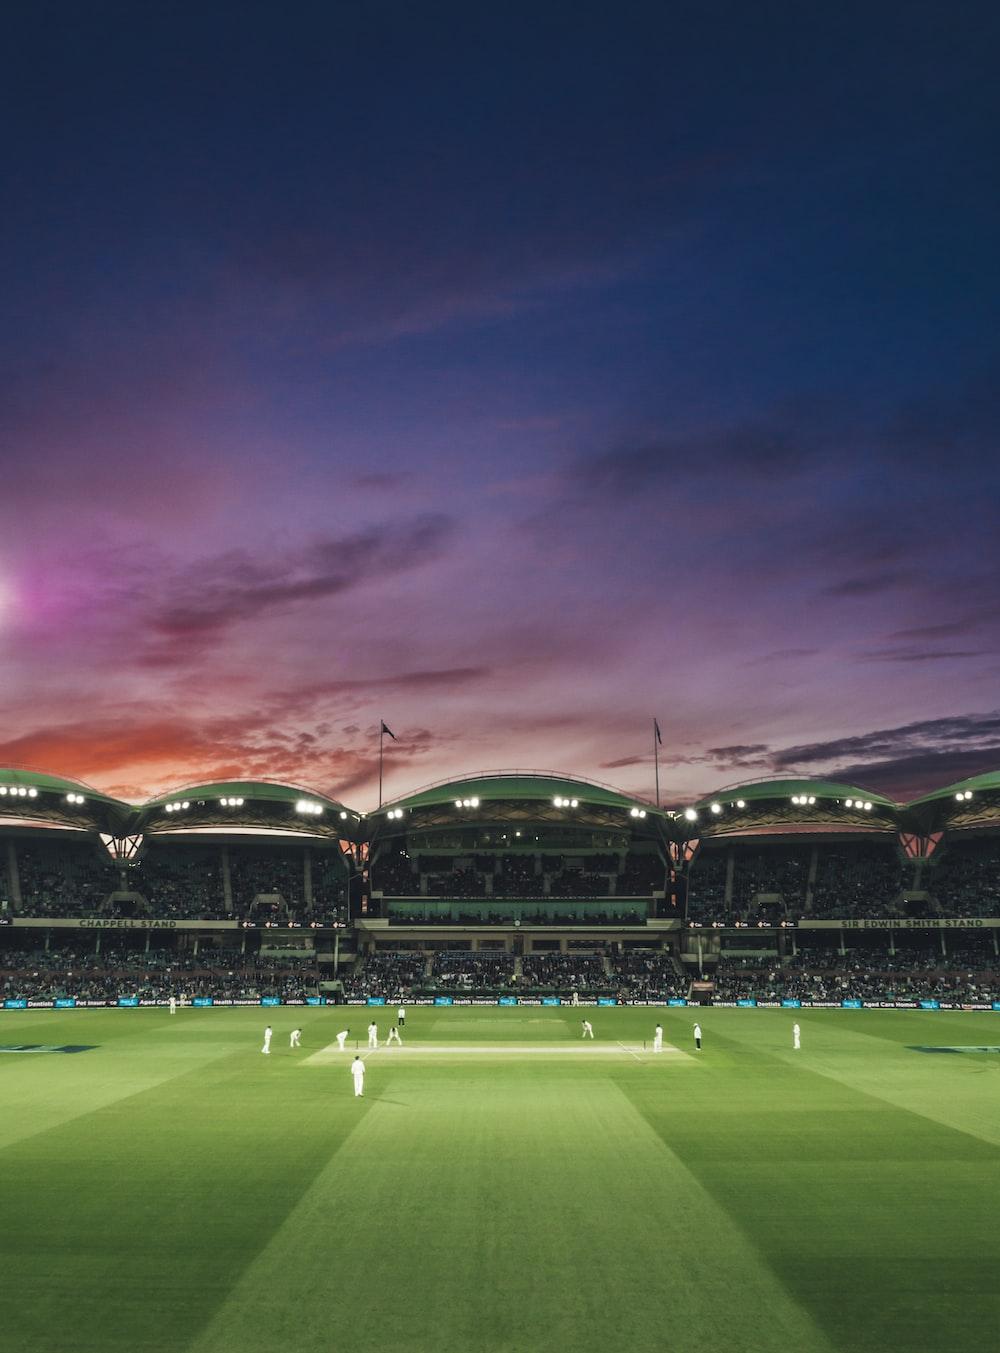 Cricket stadium 